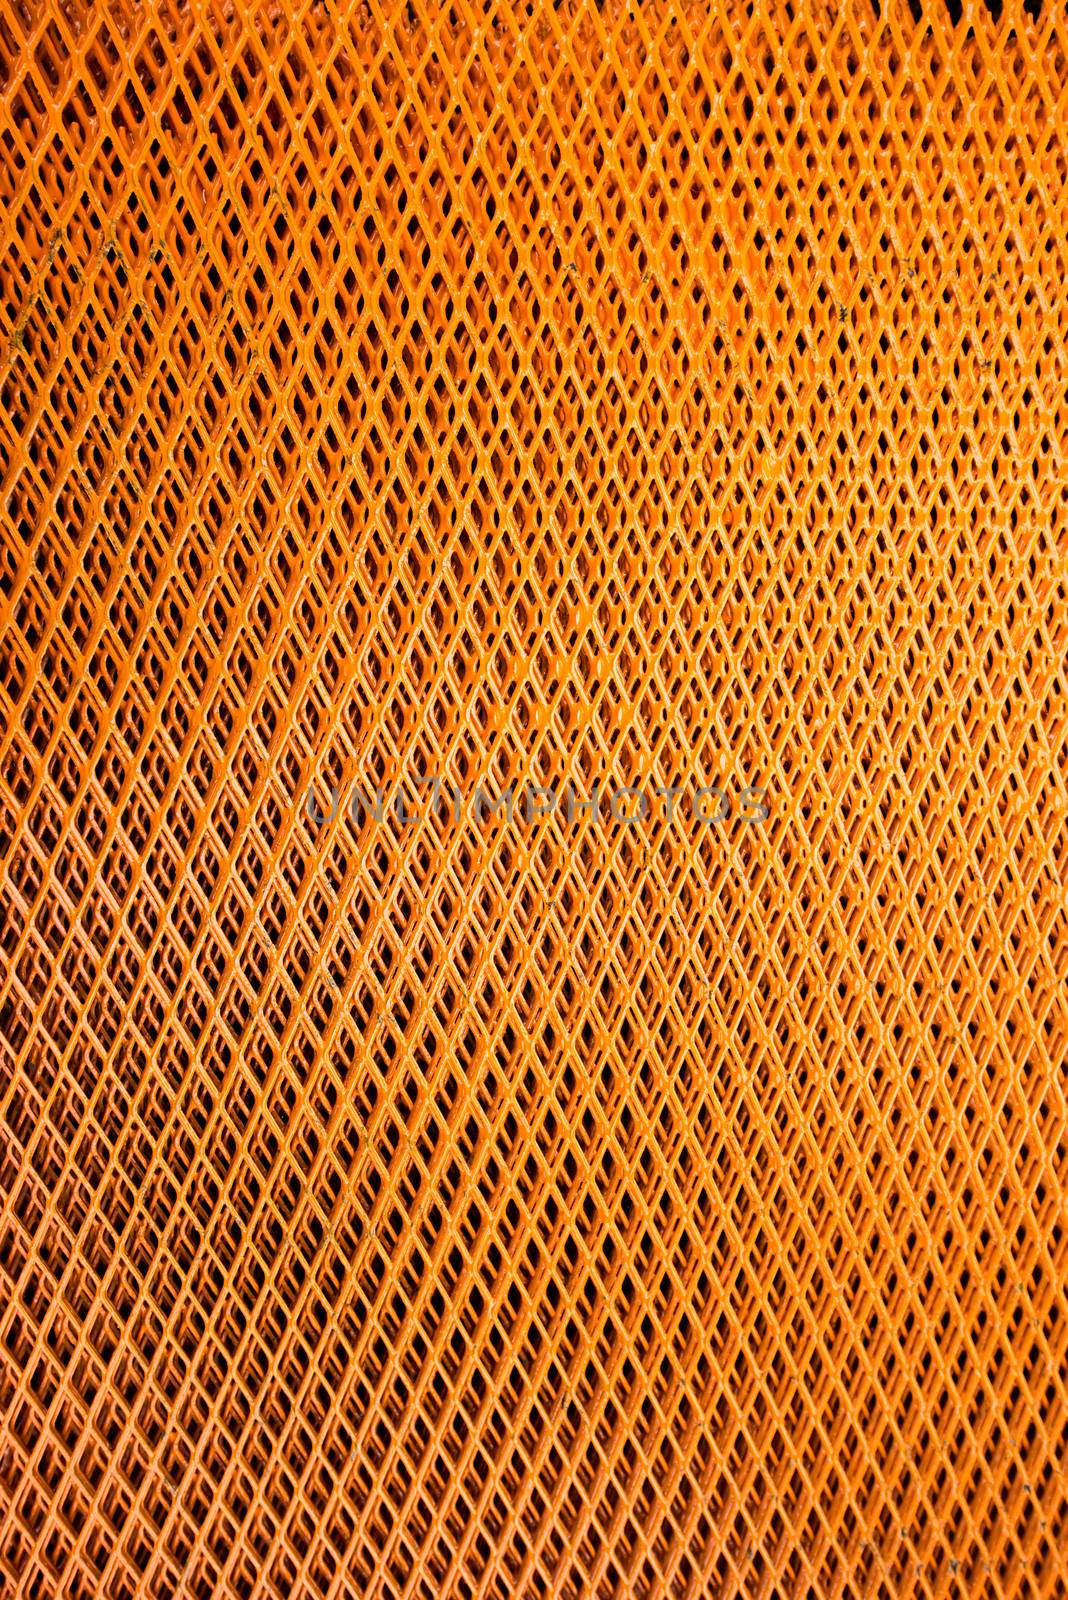 steel mesh background by antpkr